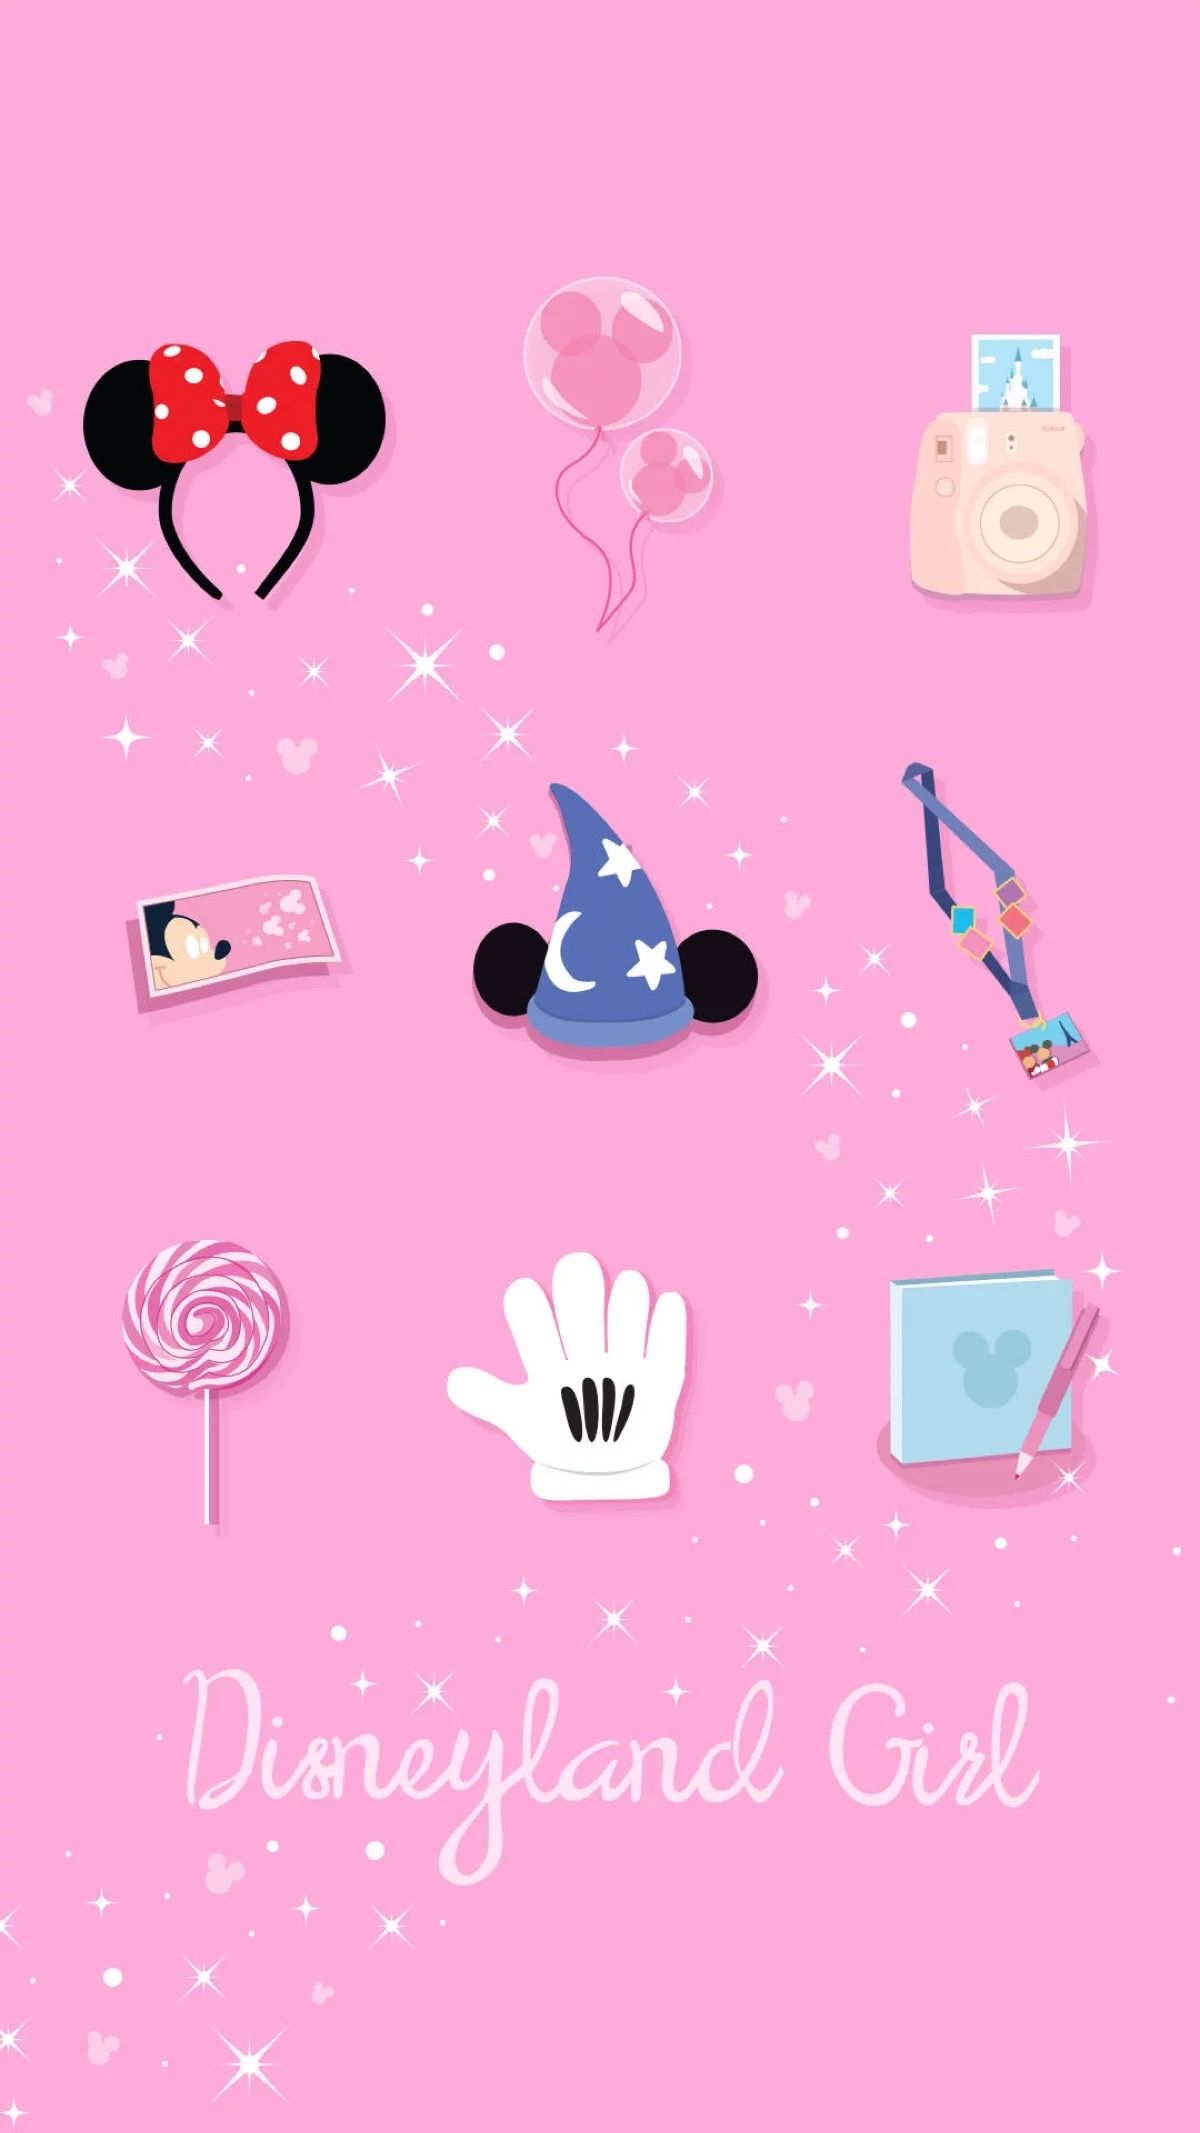 Mickey&minney. Disneyland iphone wallpaper, Disney iphone, Disney phone wallpaper